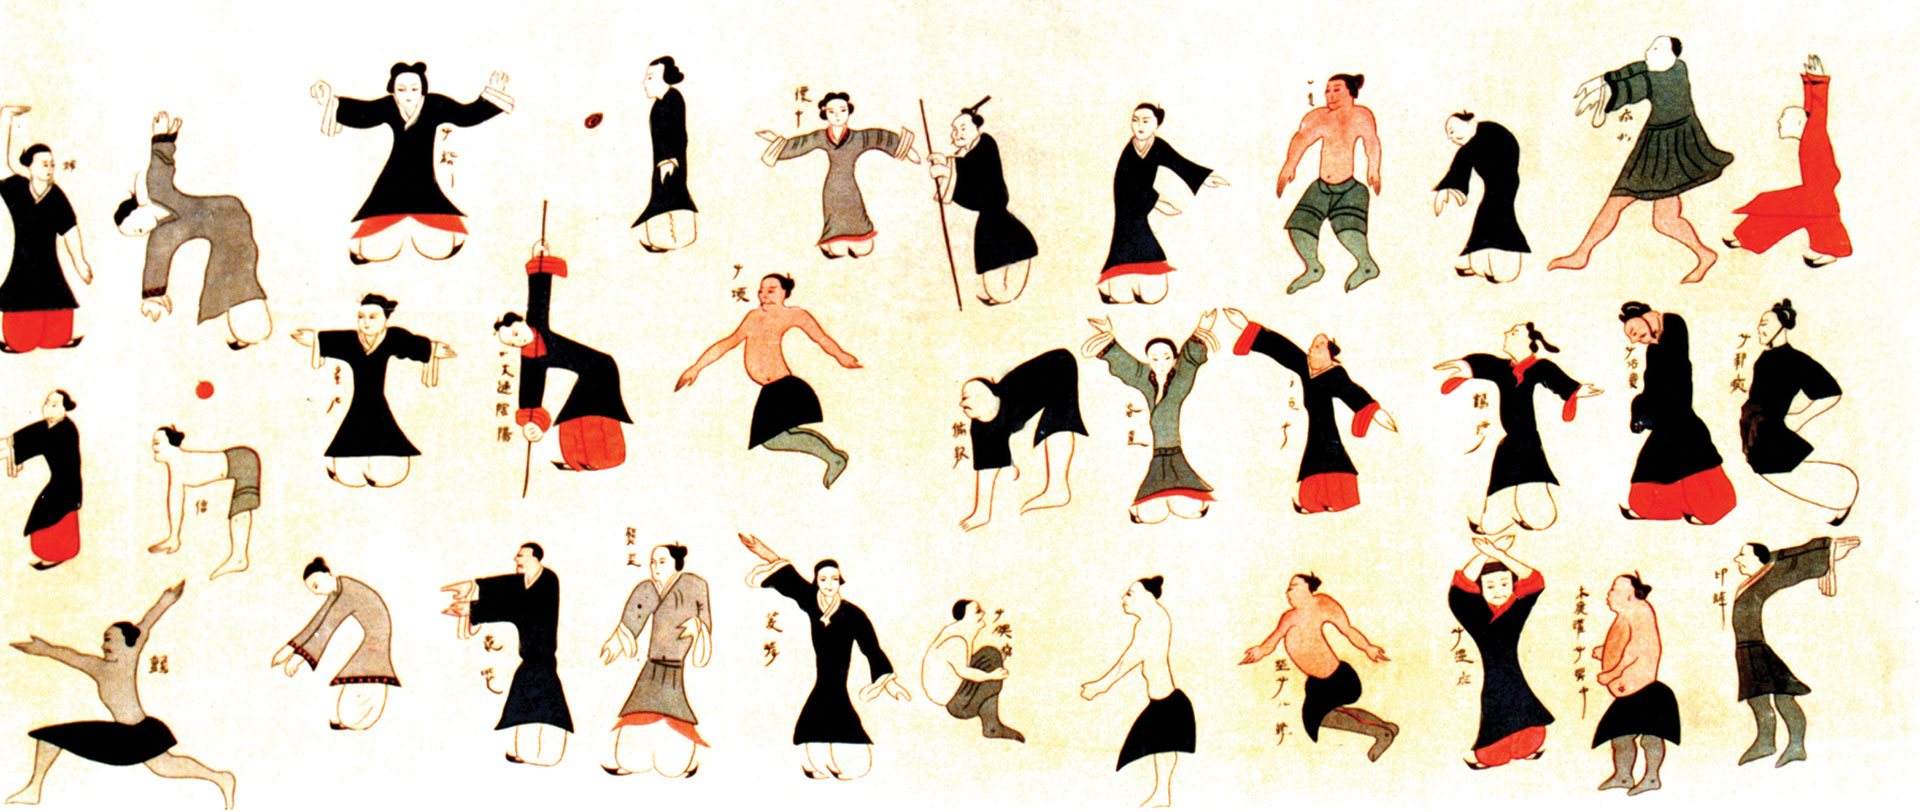 daoyin gyakorlatot bemutató figurák, a kínai gerinctorna gyökerei